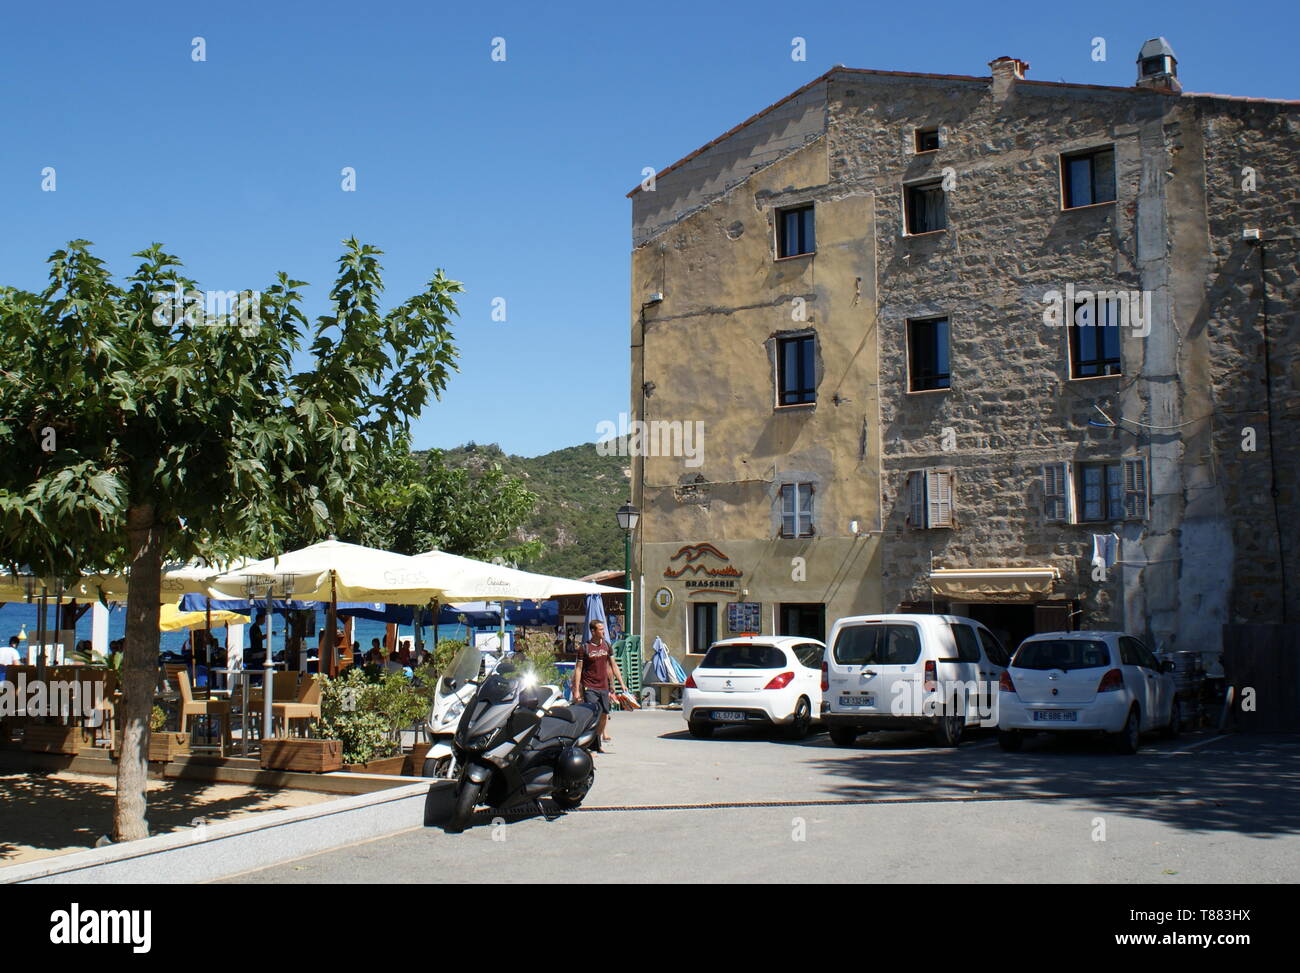 Village de Campomoro, Corse, France Banque D'Images